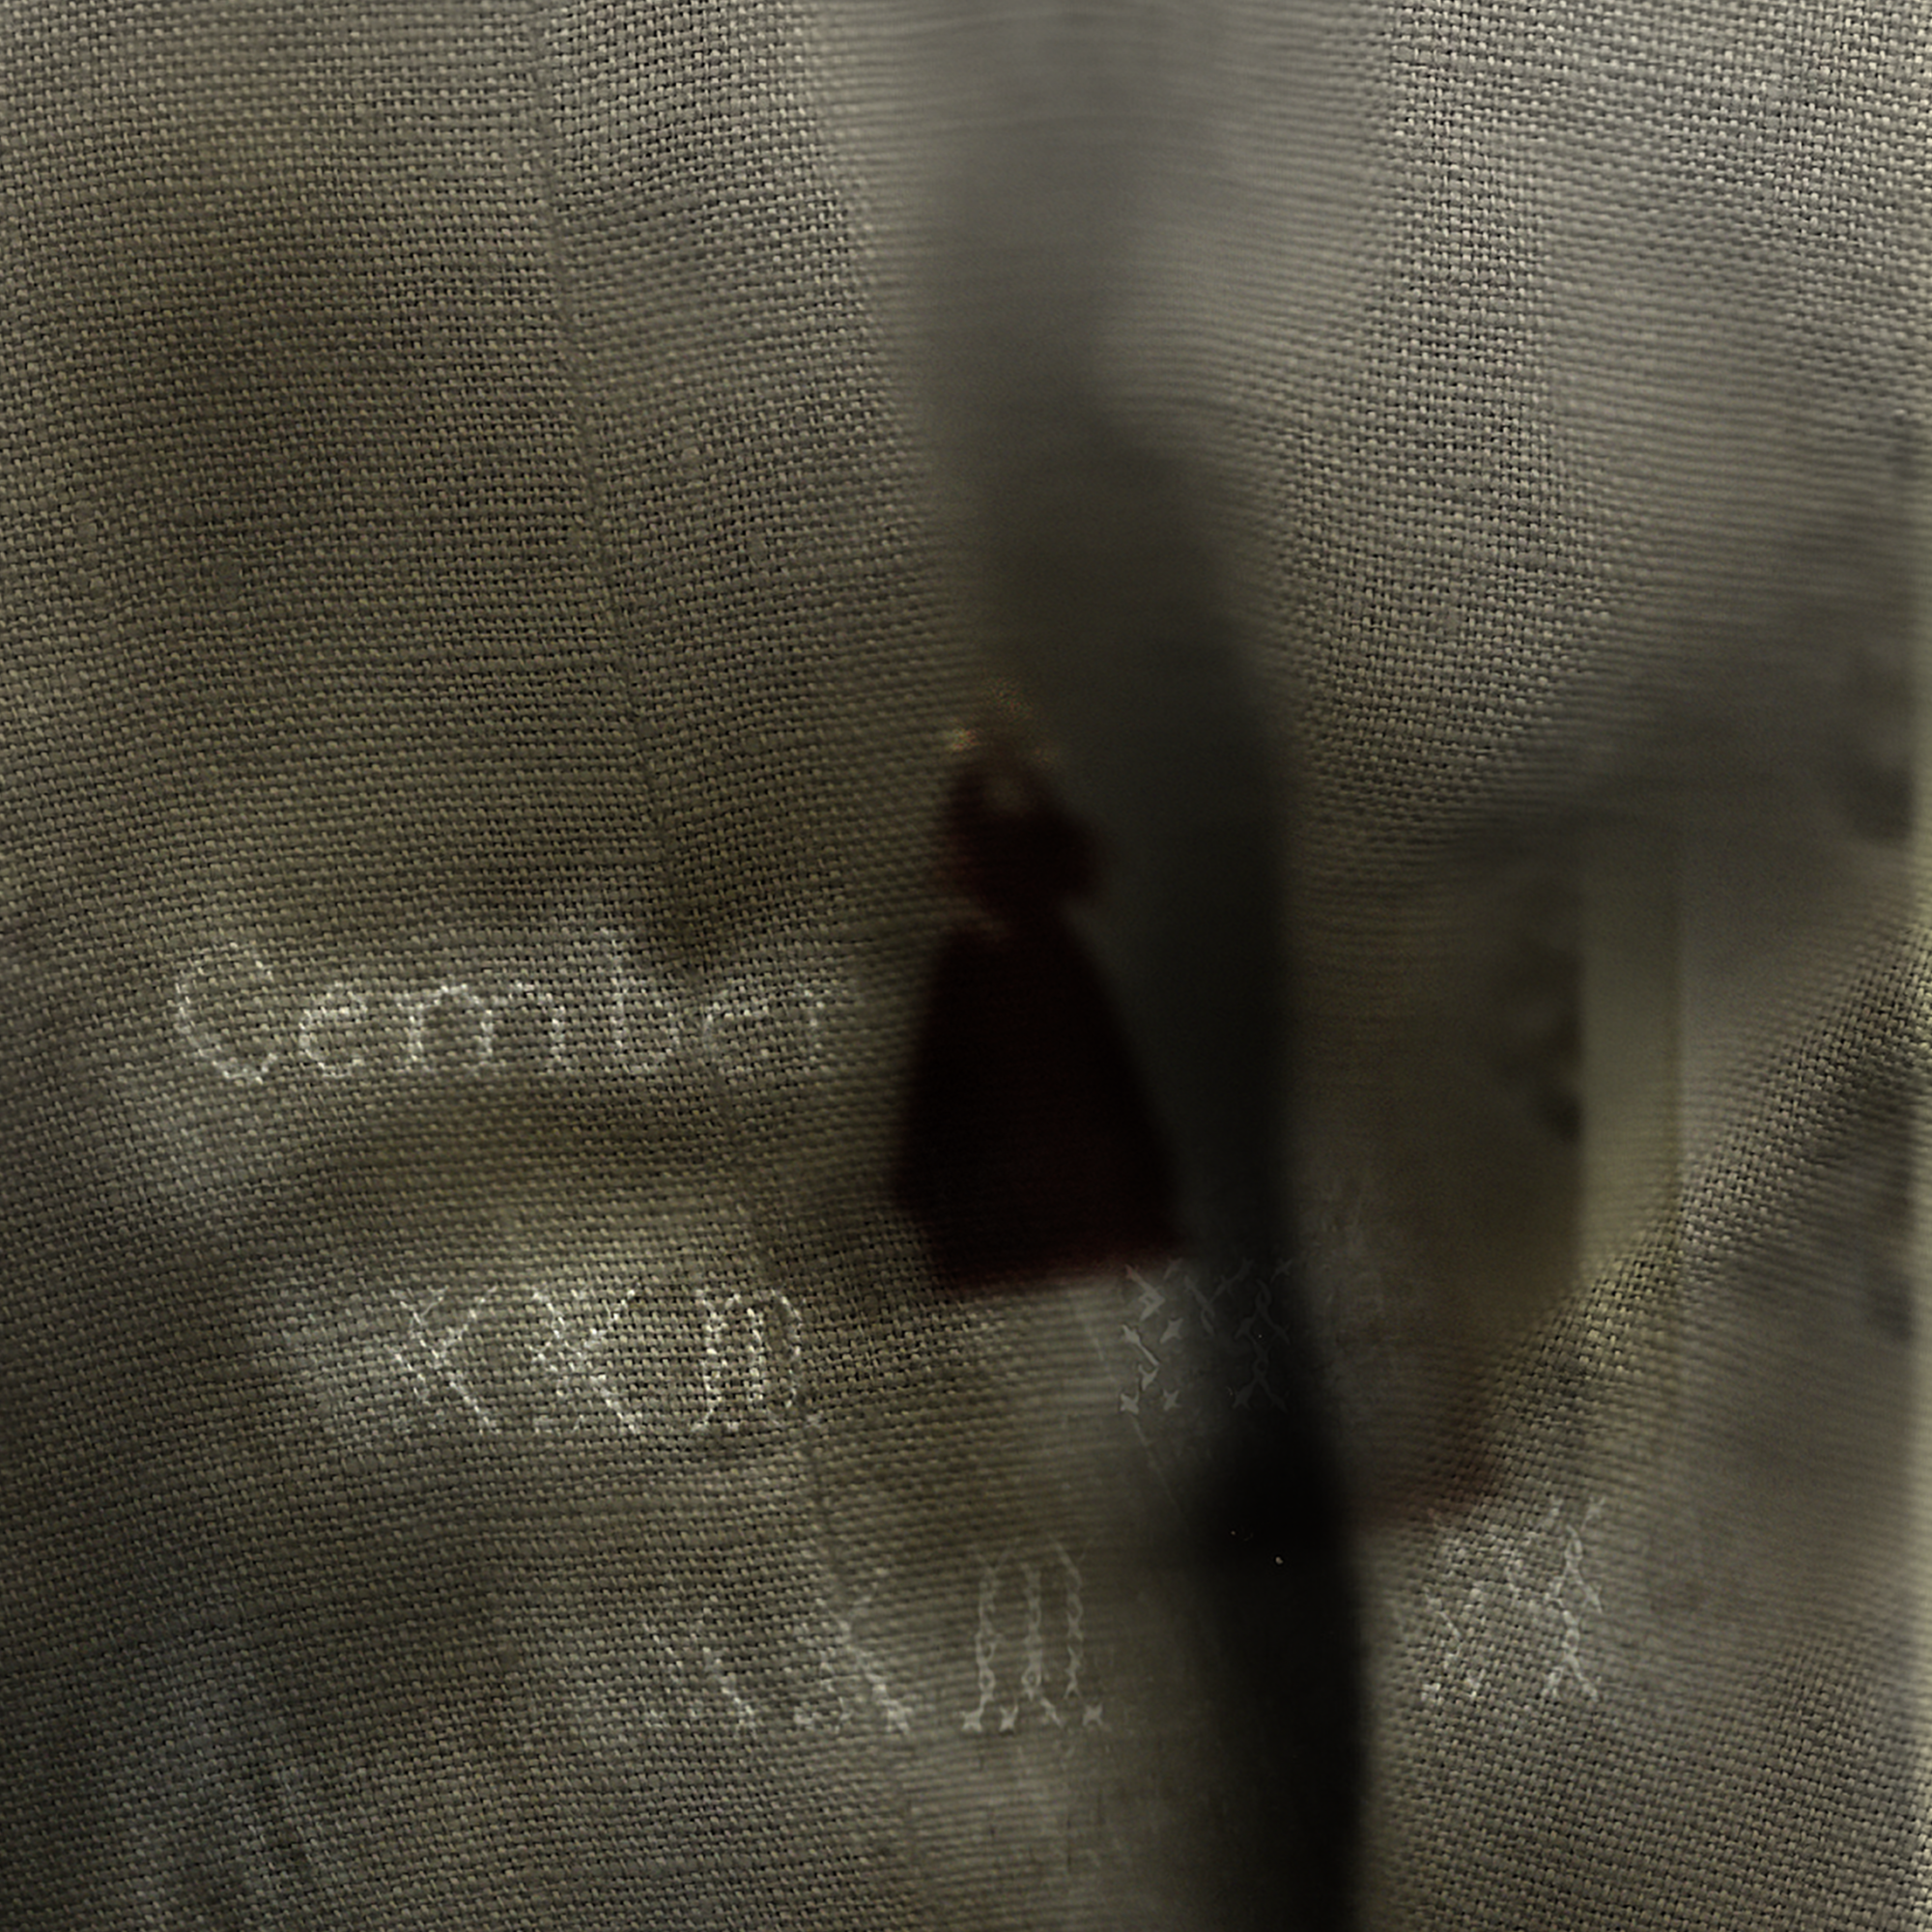 K. Mulhern – Cember (Pressed against Winter I have a floating feeling) (UNSLMX005)